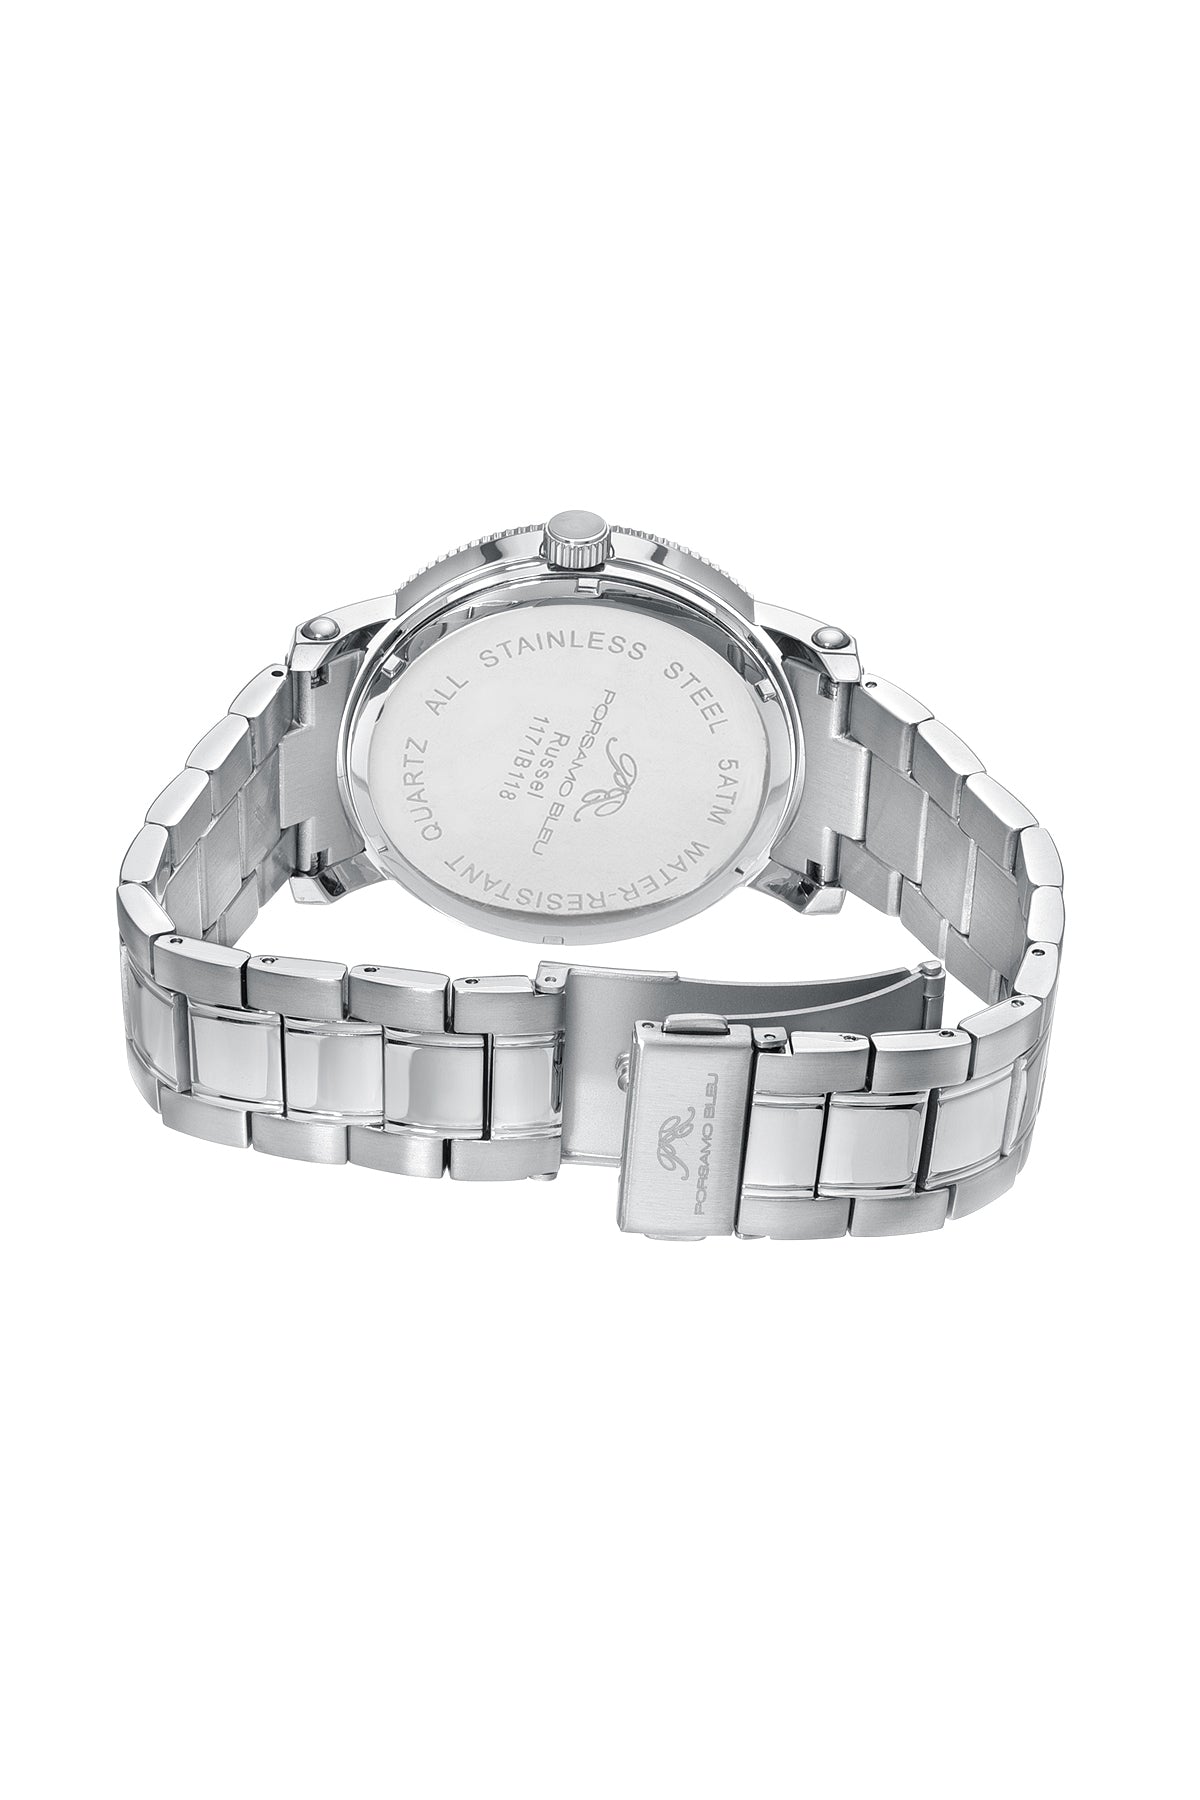 Porsamo Bleu Russel Luxury Multi Function Men's Stainless Steel Watch, Silver, Blue 1171BRUS